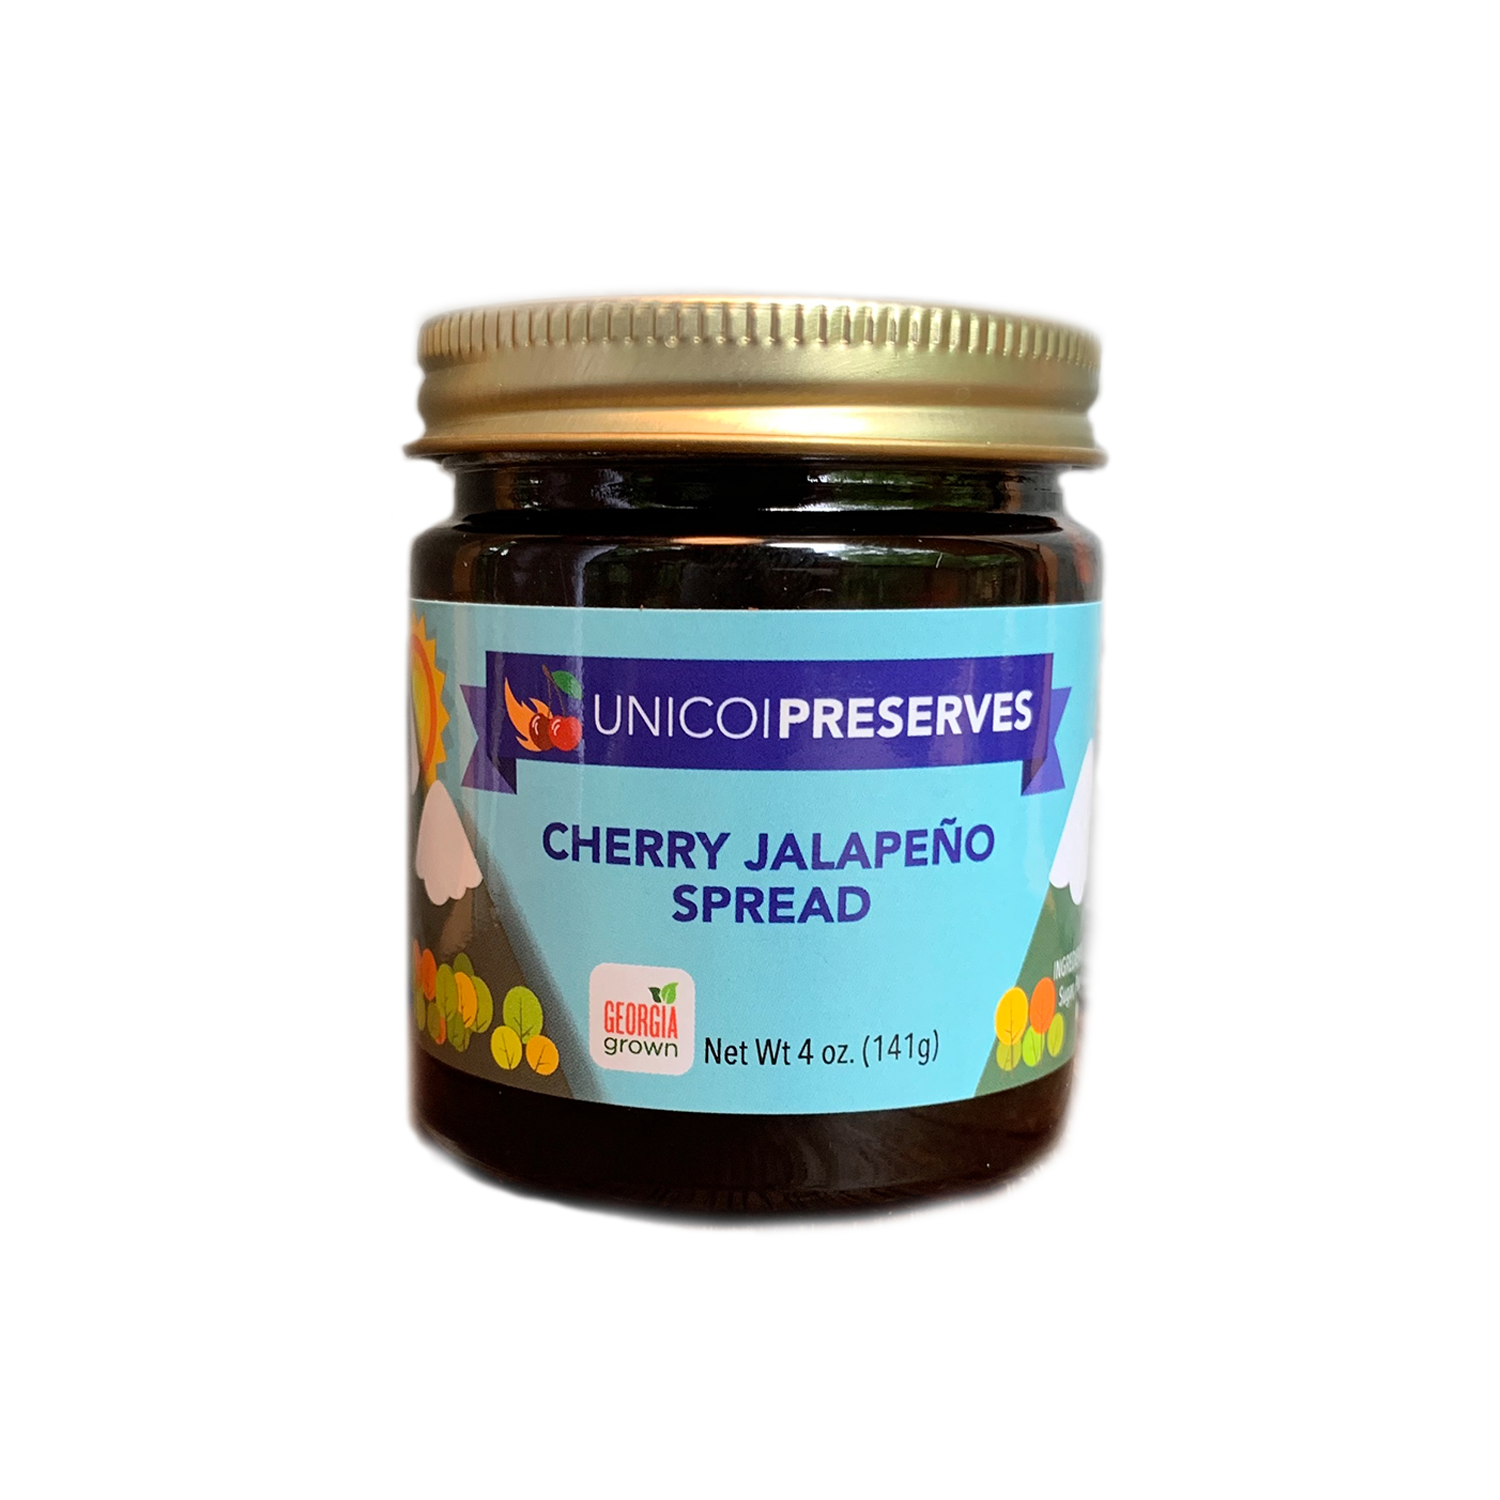 Unicoi Preserves Cherry Jalapeno Spread